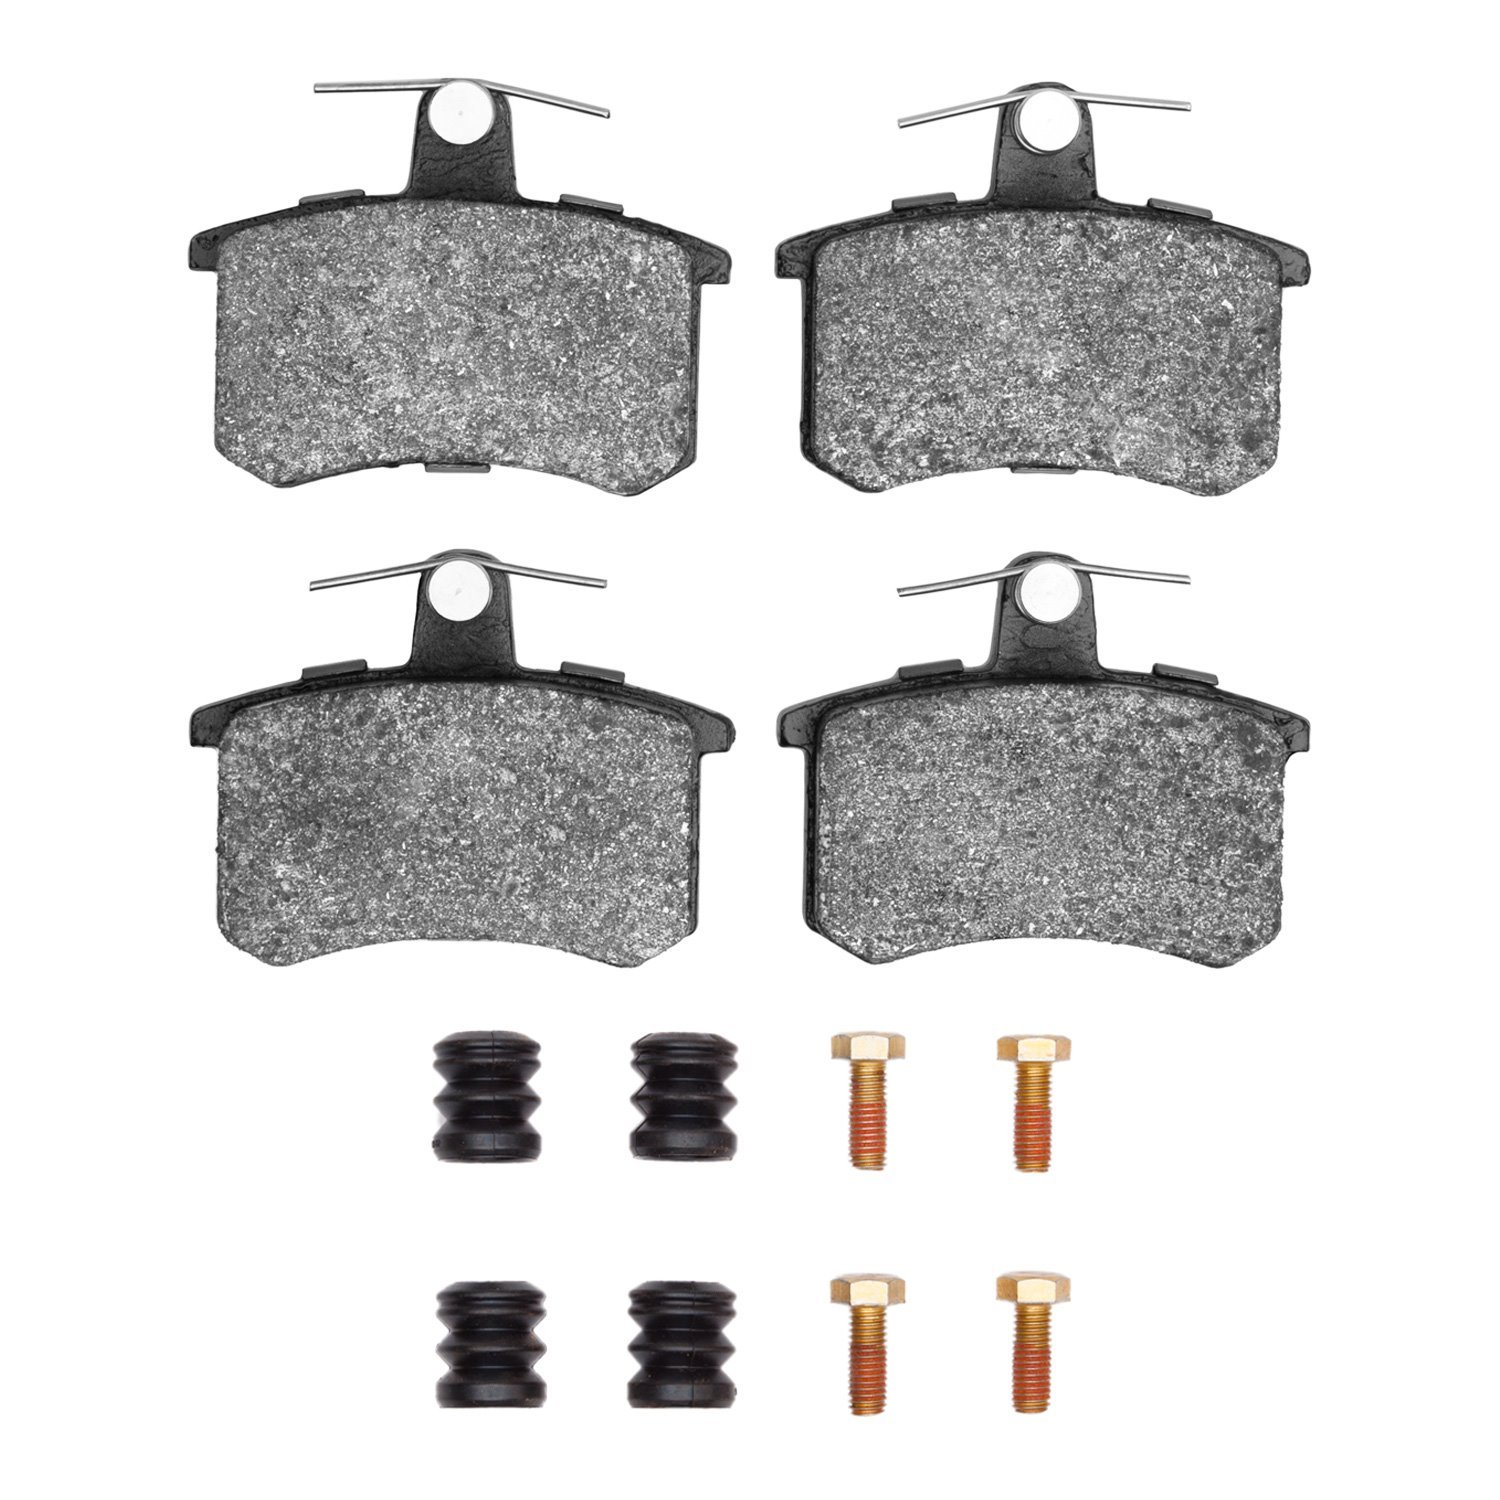 Semi-Metallic Brake Pads & Hardware Kit, 1980-2001 Fits Multiple Makes/Models, Position: Rear